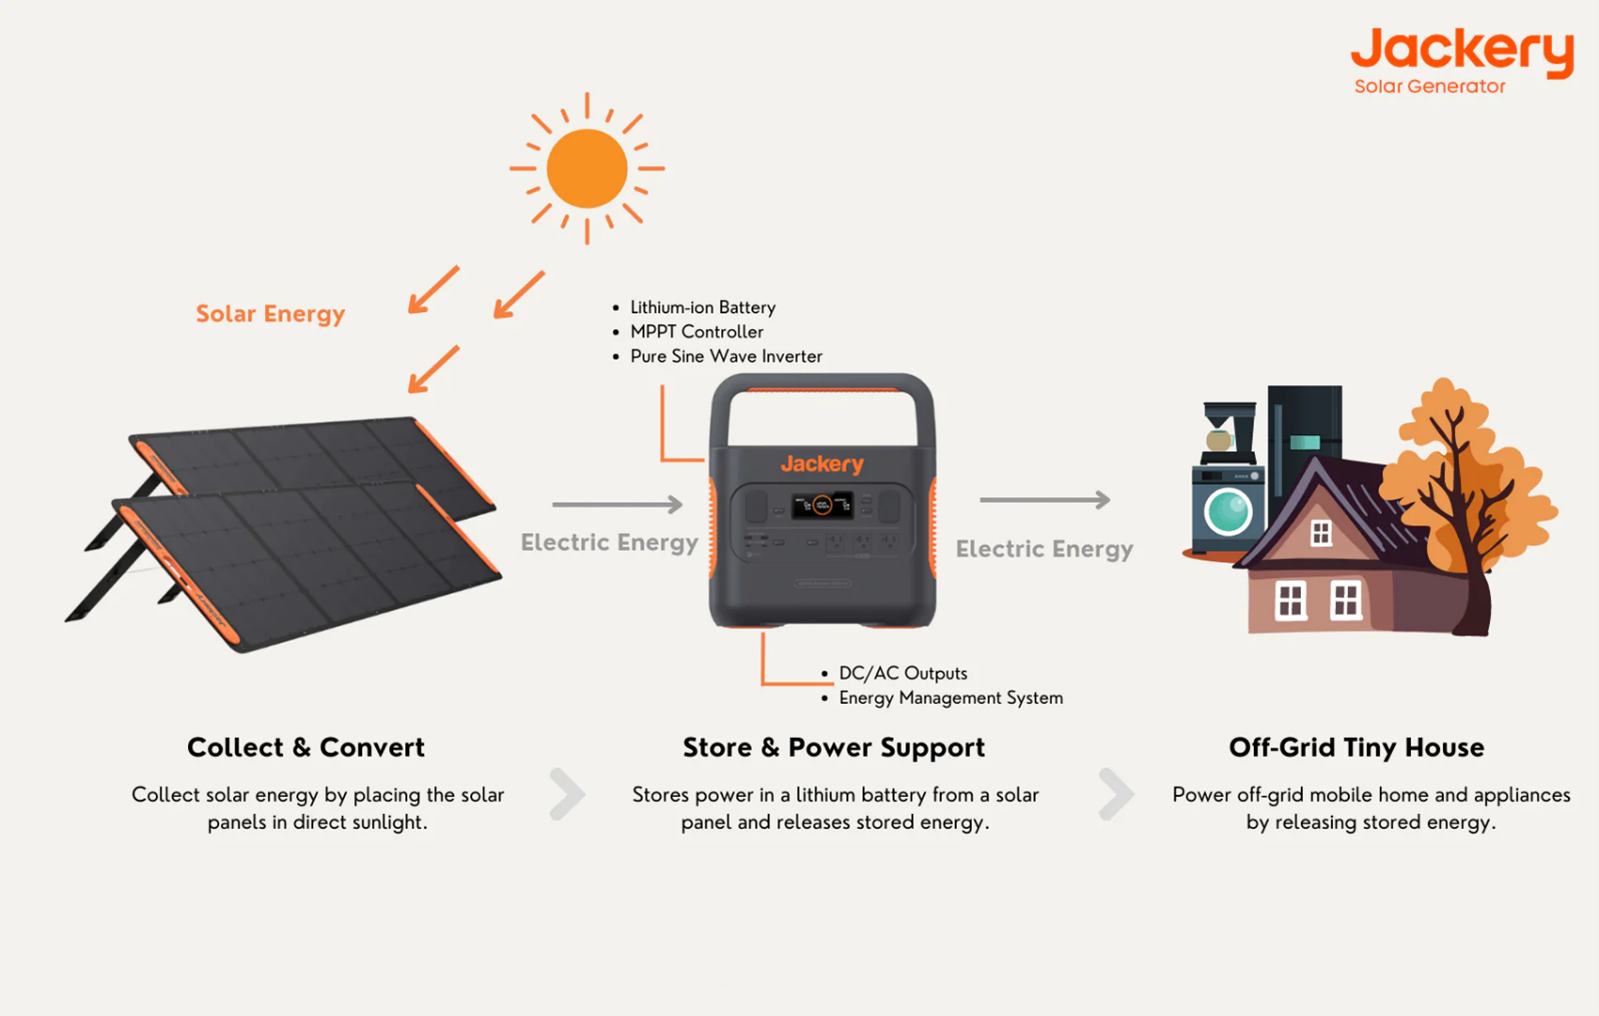 Wie funktionieren Jackery Solargeneratoren?